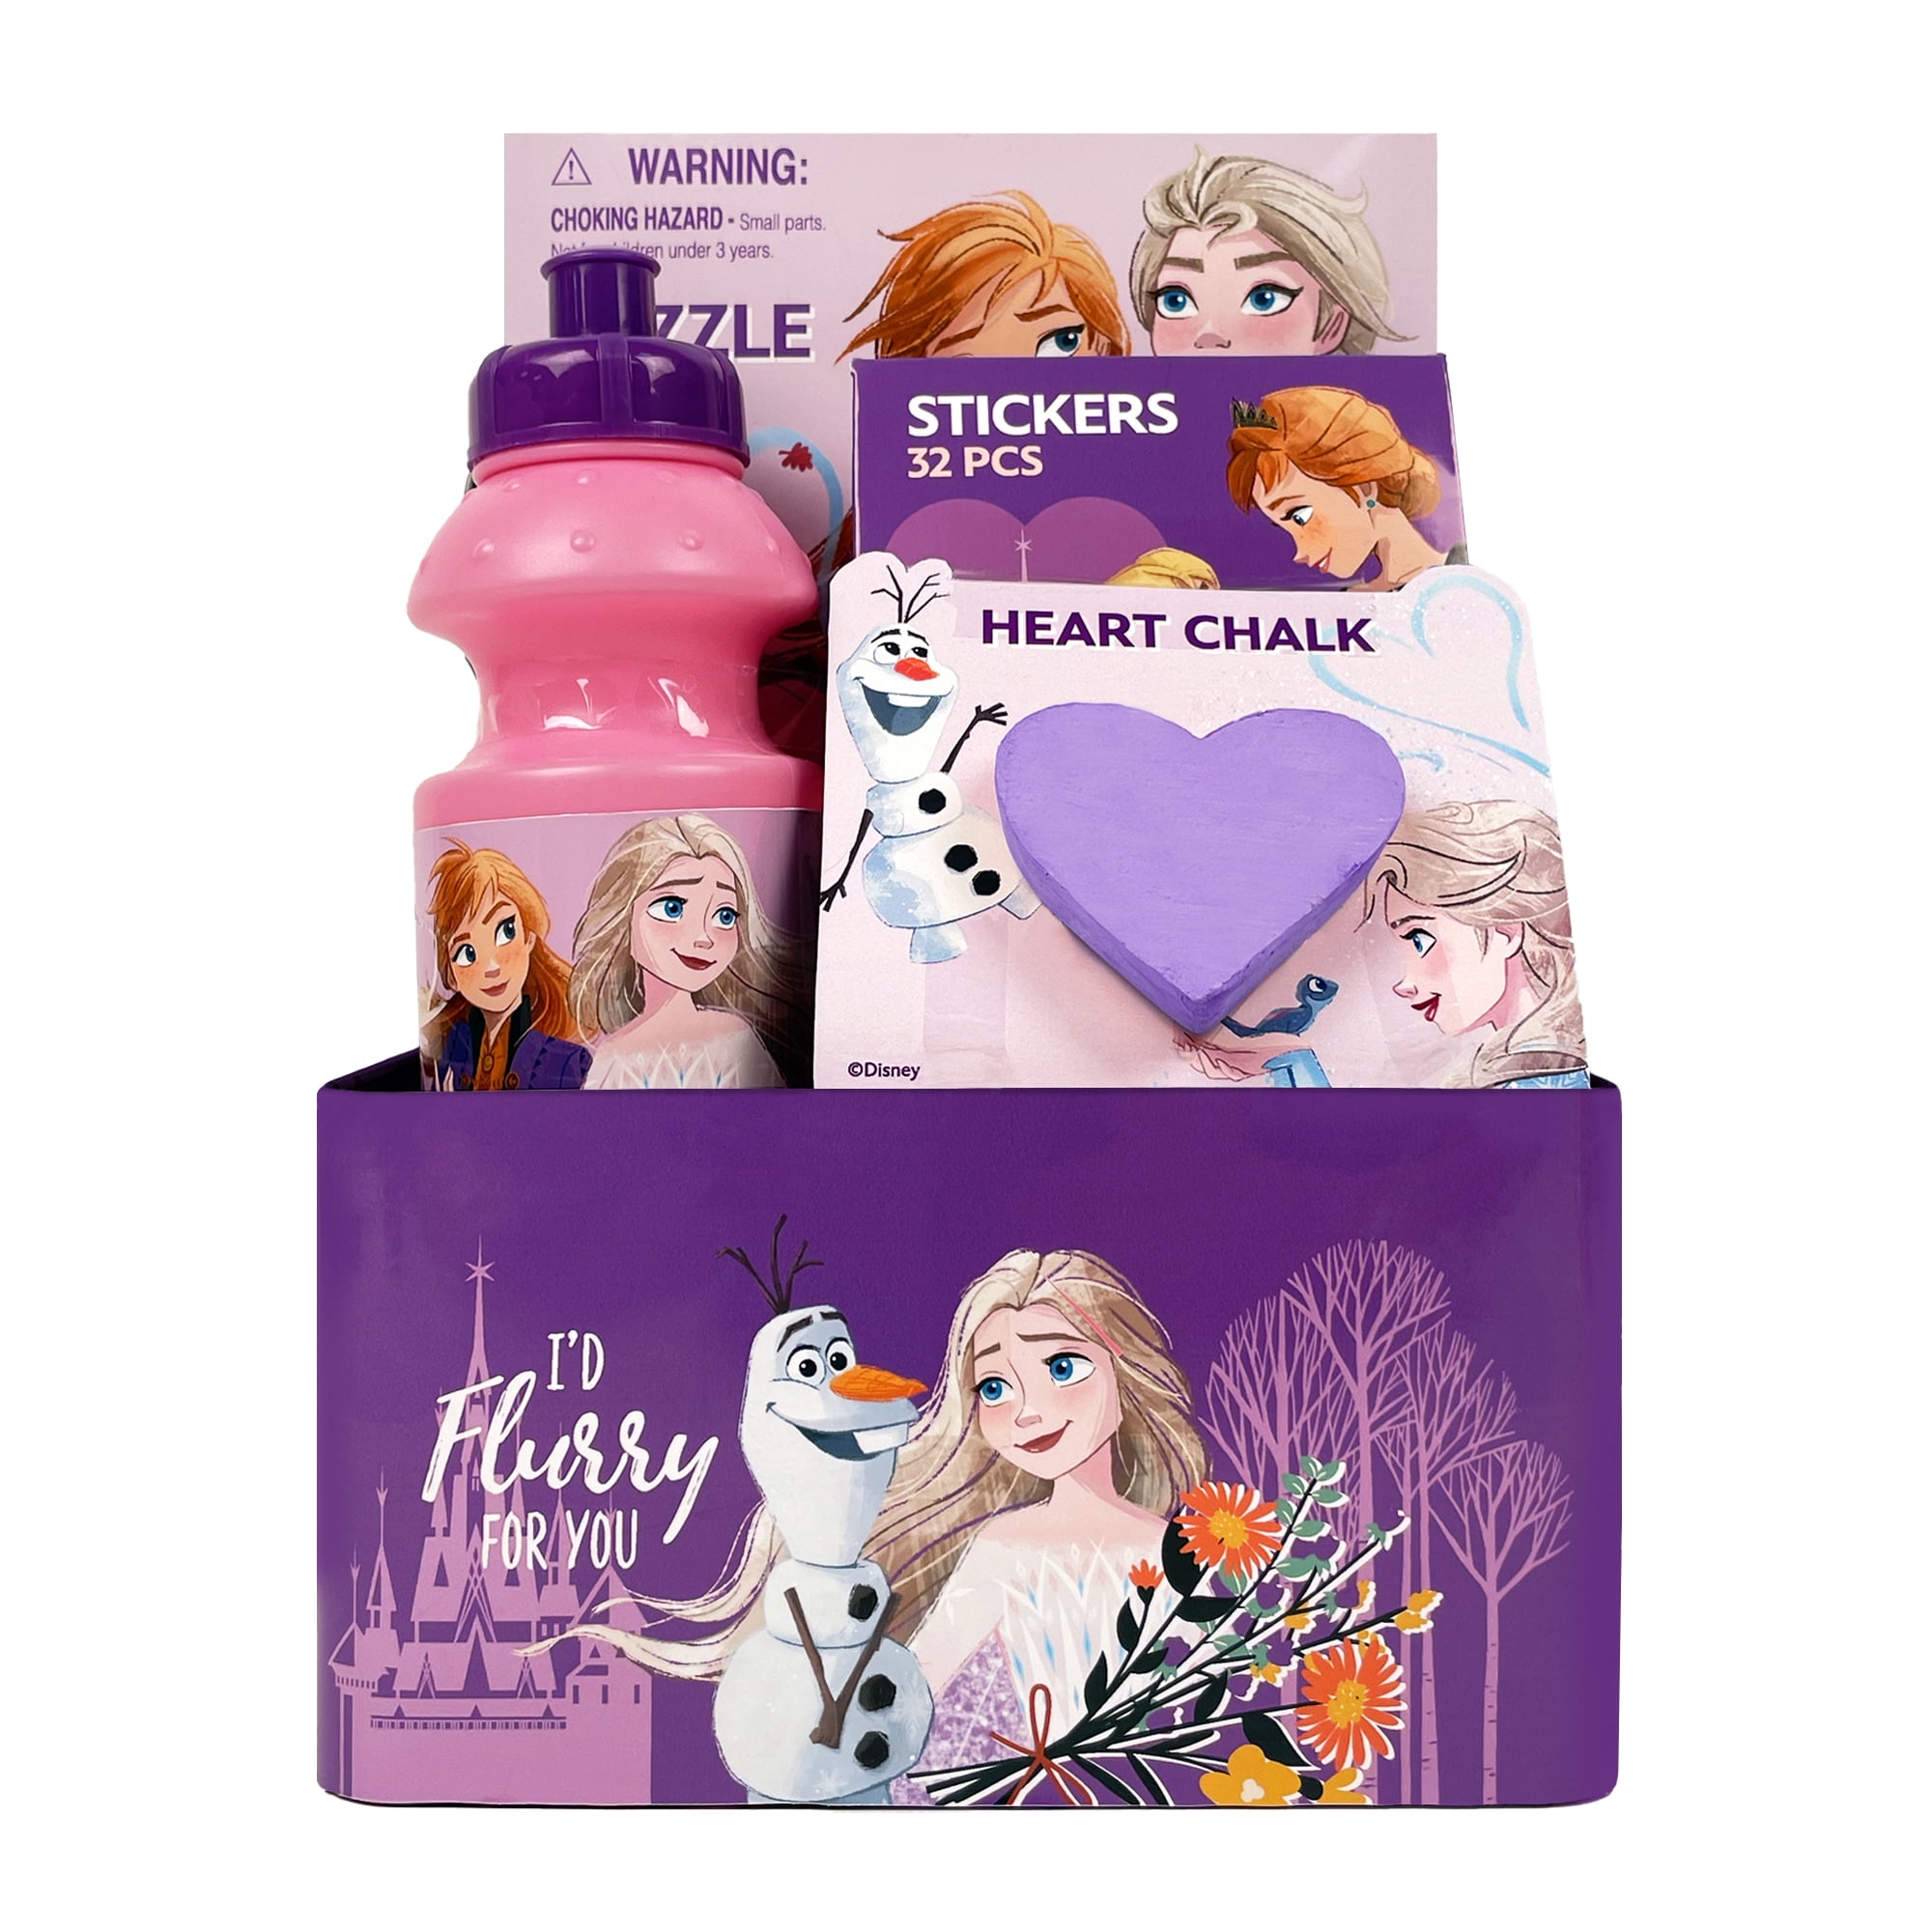 Frozen 2 Valentine's Day Tin Box Gift Set